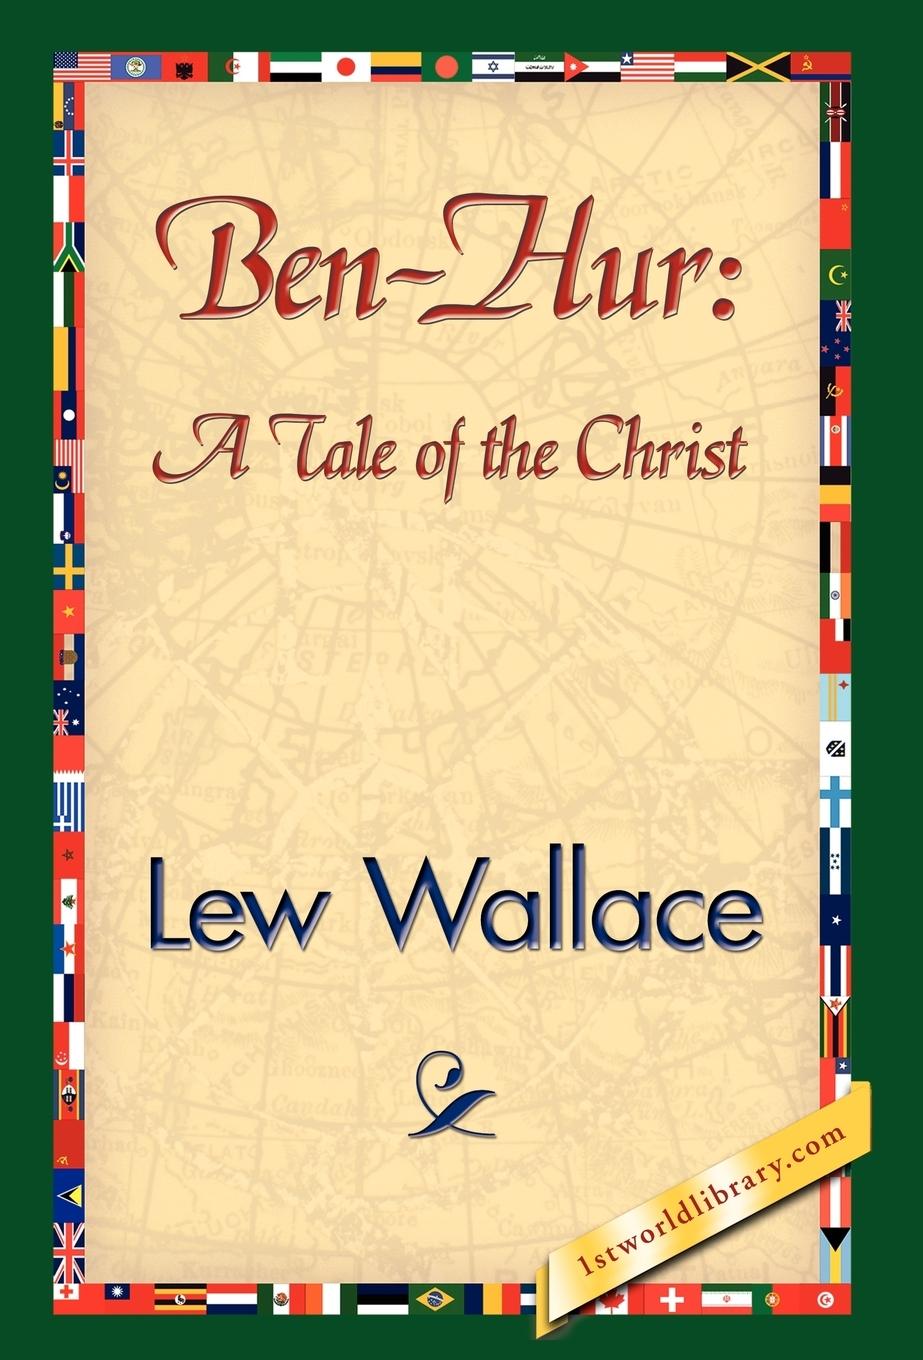 Ben-Hur - Wallace, Lewis Wallace, Lew